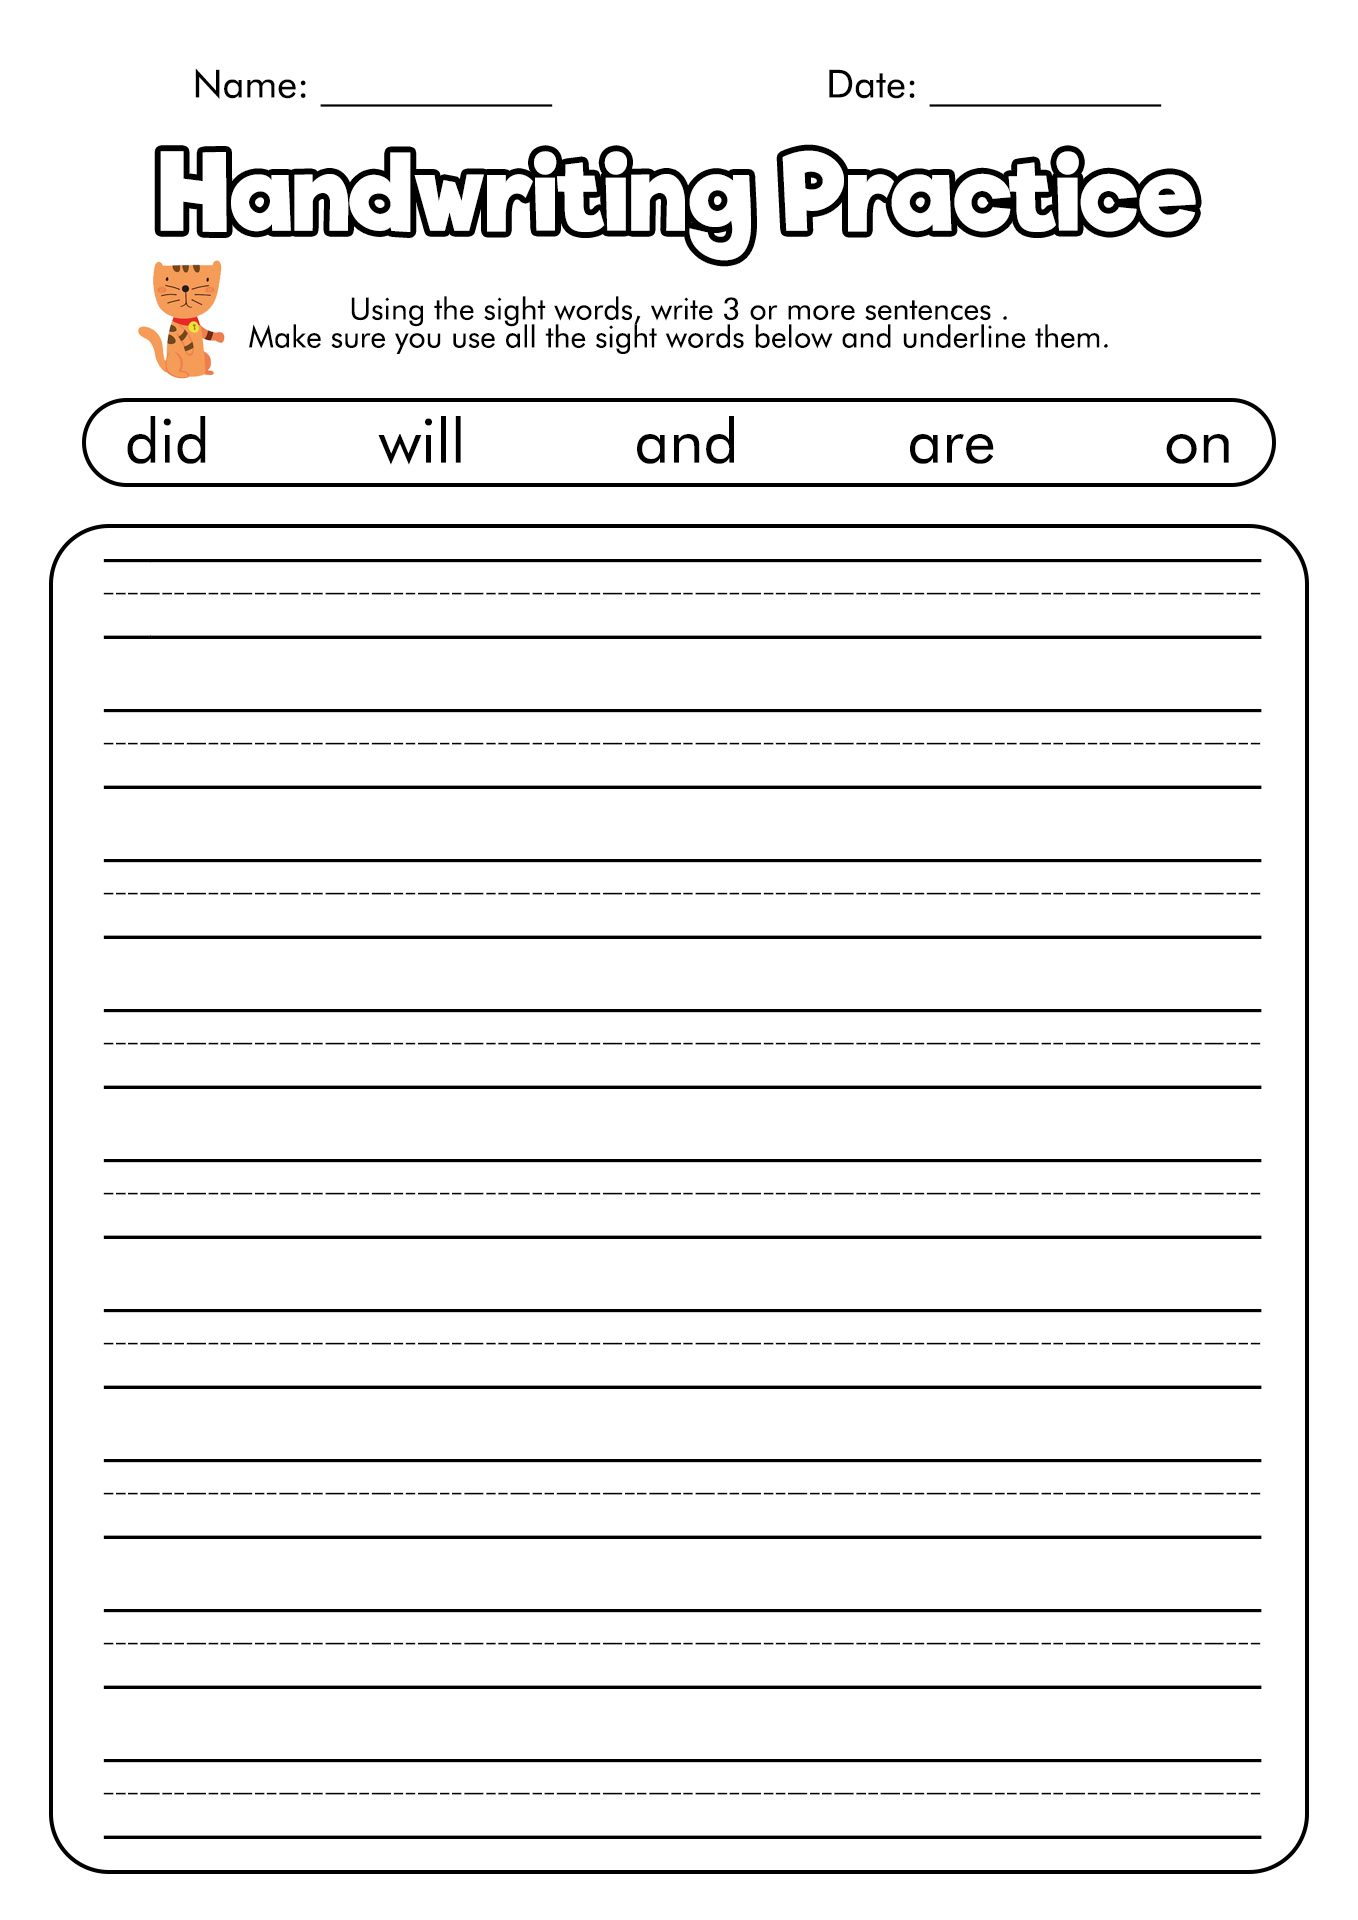 1st Grade Sight Word Handwriting Practice Worksheets